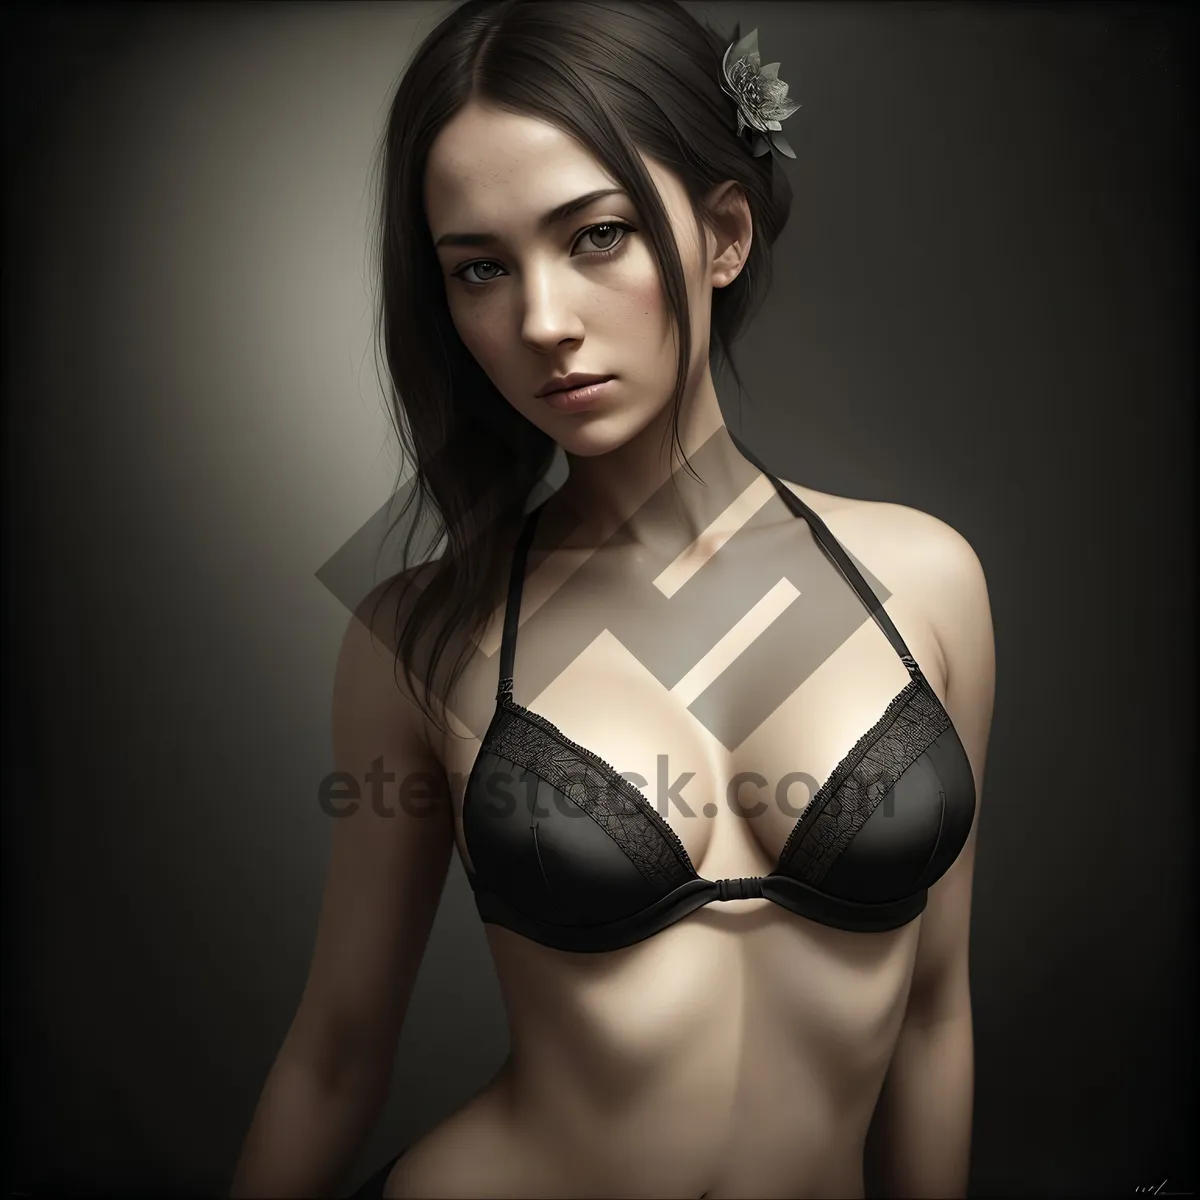 Picture of Seductive lingerie model flaunting black bra.